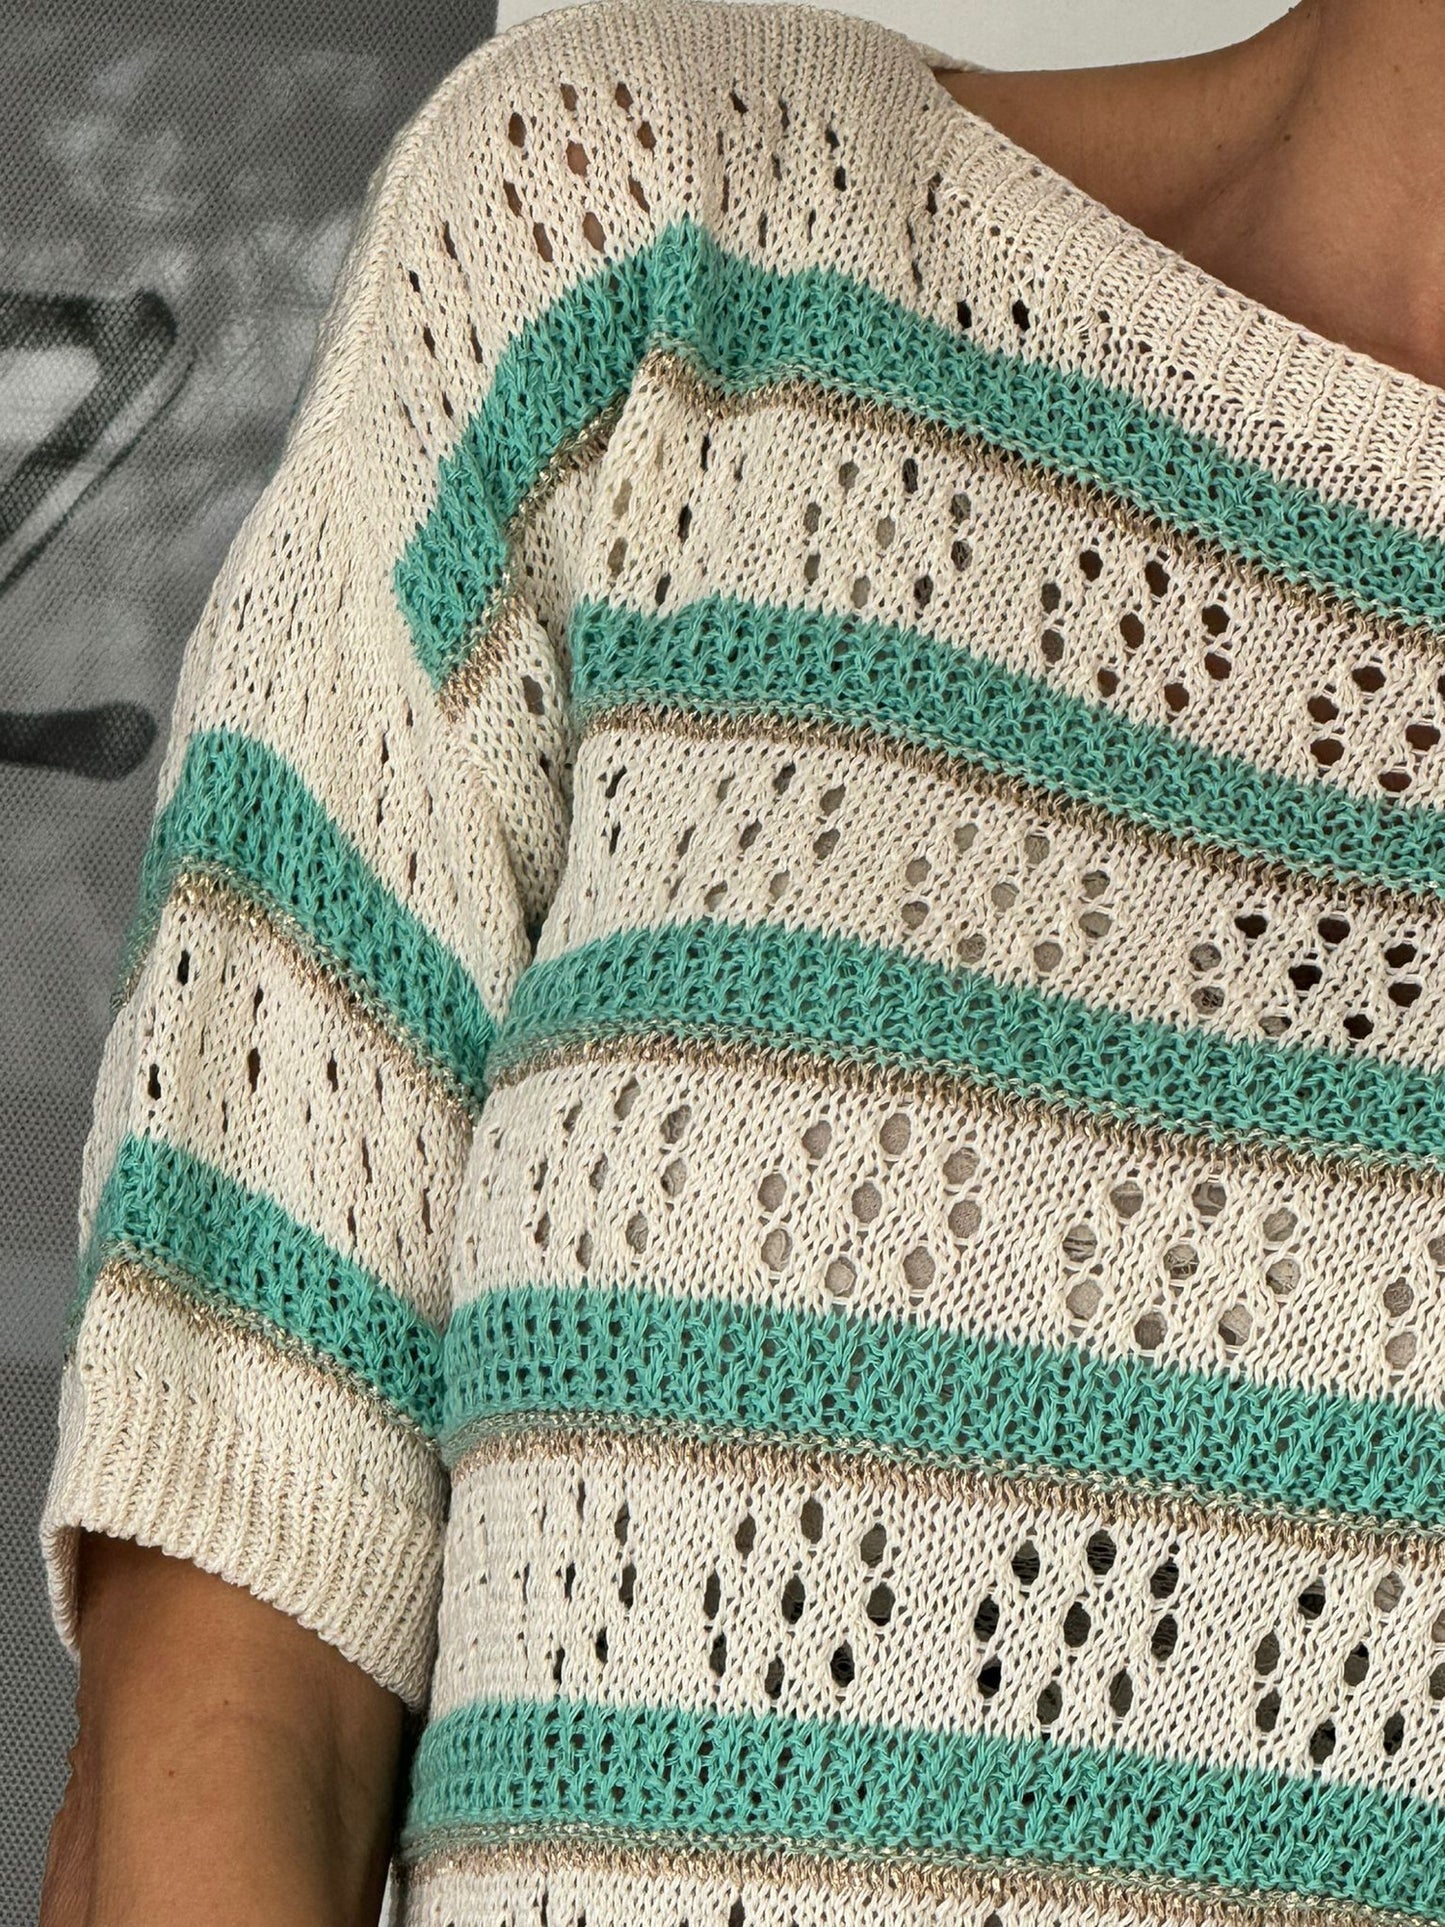 Pull crochet striped green